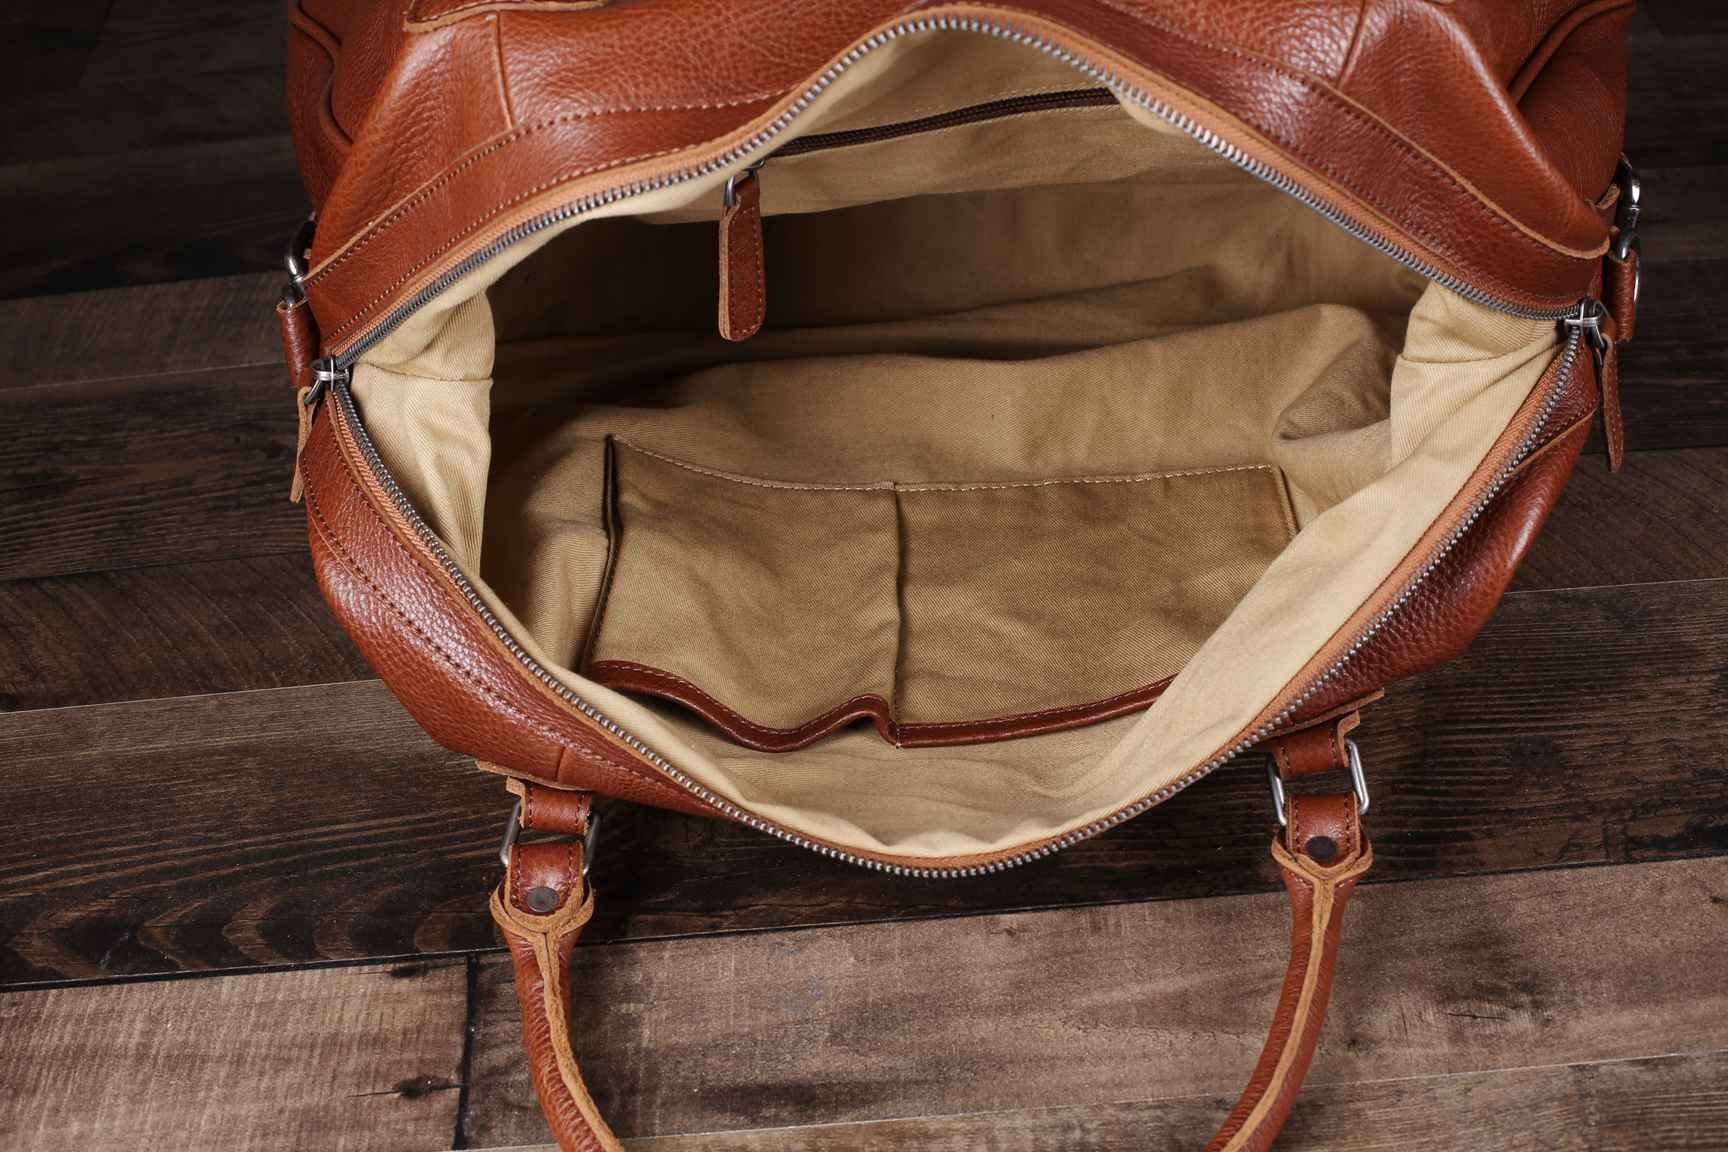 Vintage Style Vegetable Tanned Leather Travel Bag, Duffle Bag, Weekender Bag, Holdall 9029 ...